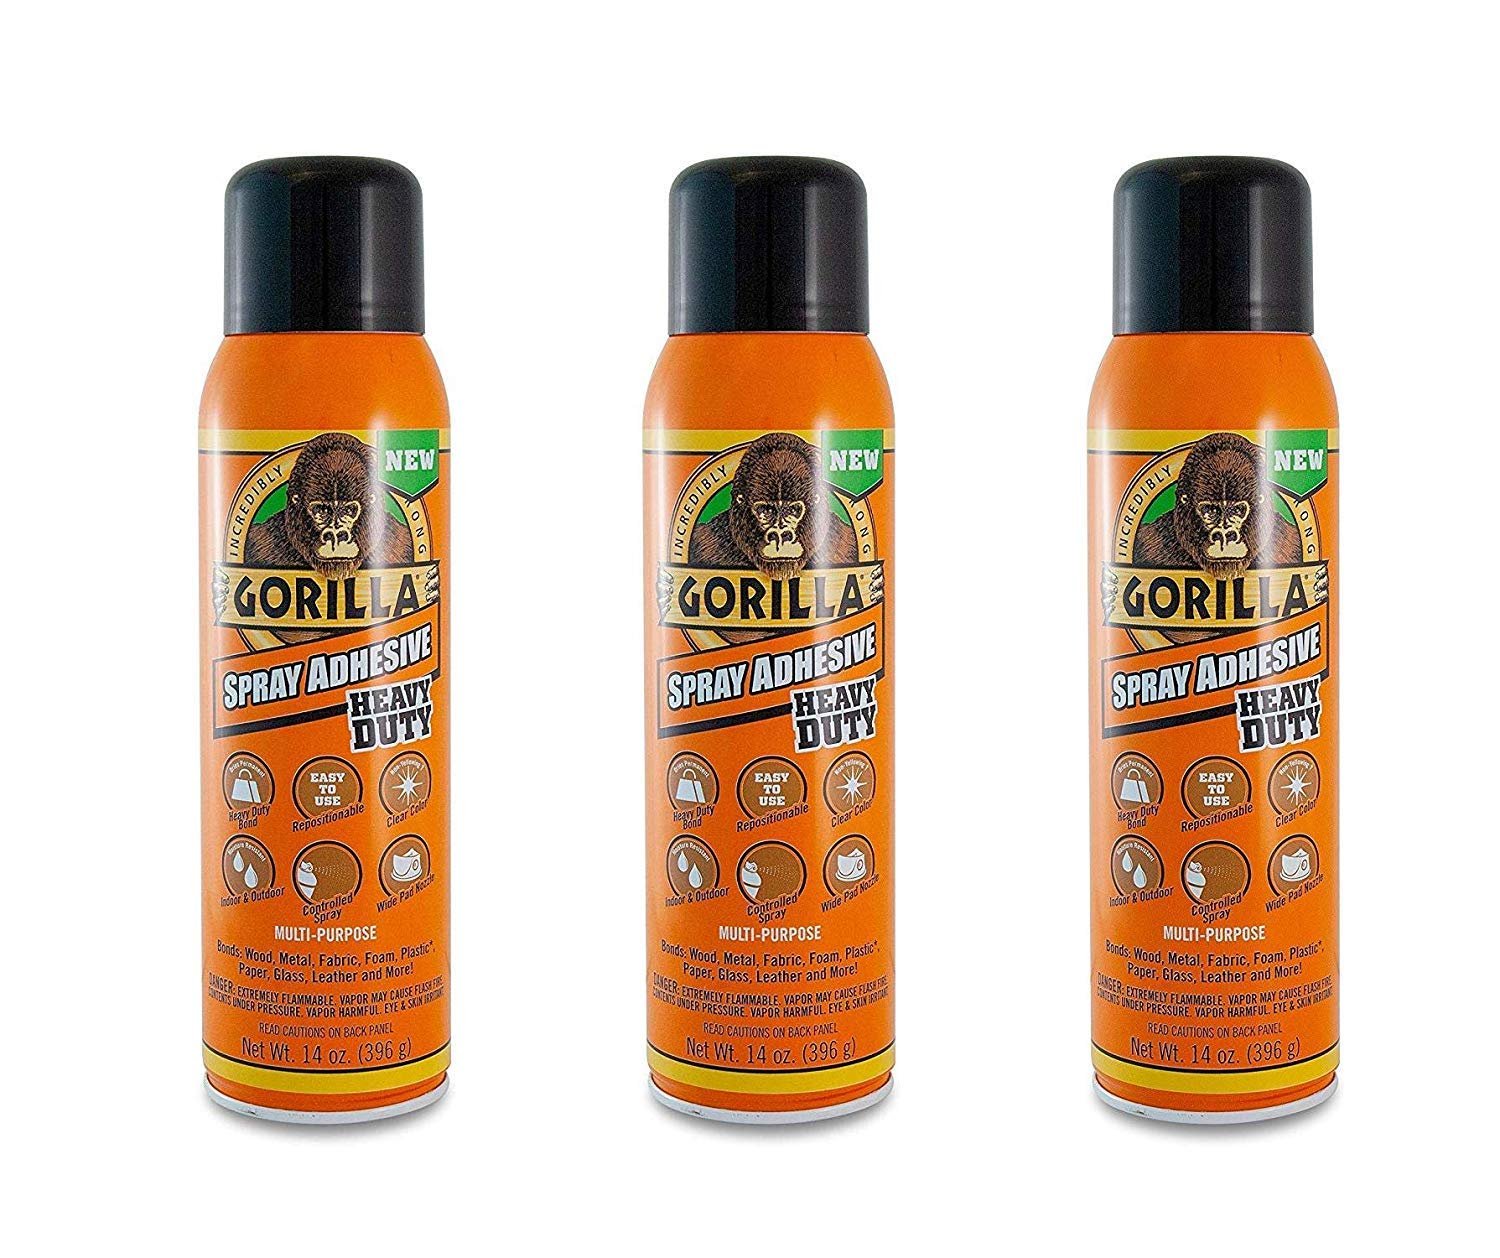 Gorilla Glue Gorilla Spray Adhesive - 14 oz - Multipurpose, Indoor,  Outdoor, Project, Wood, Fabric, Foam, Plastic, Metal, Paper, Glass,  -  Permanen 